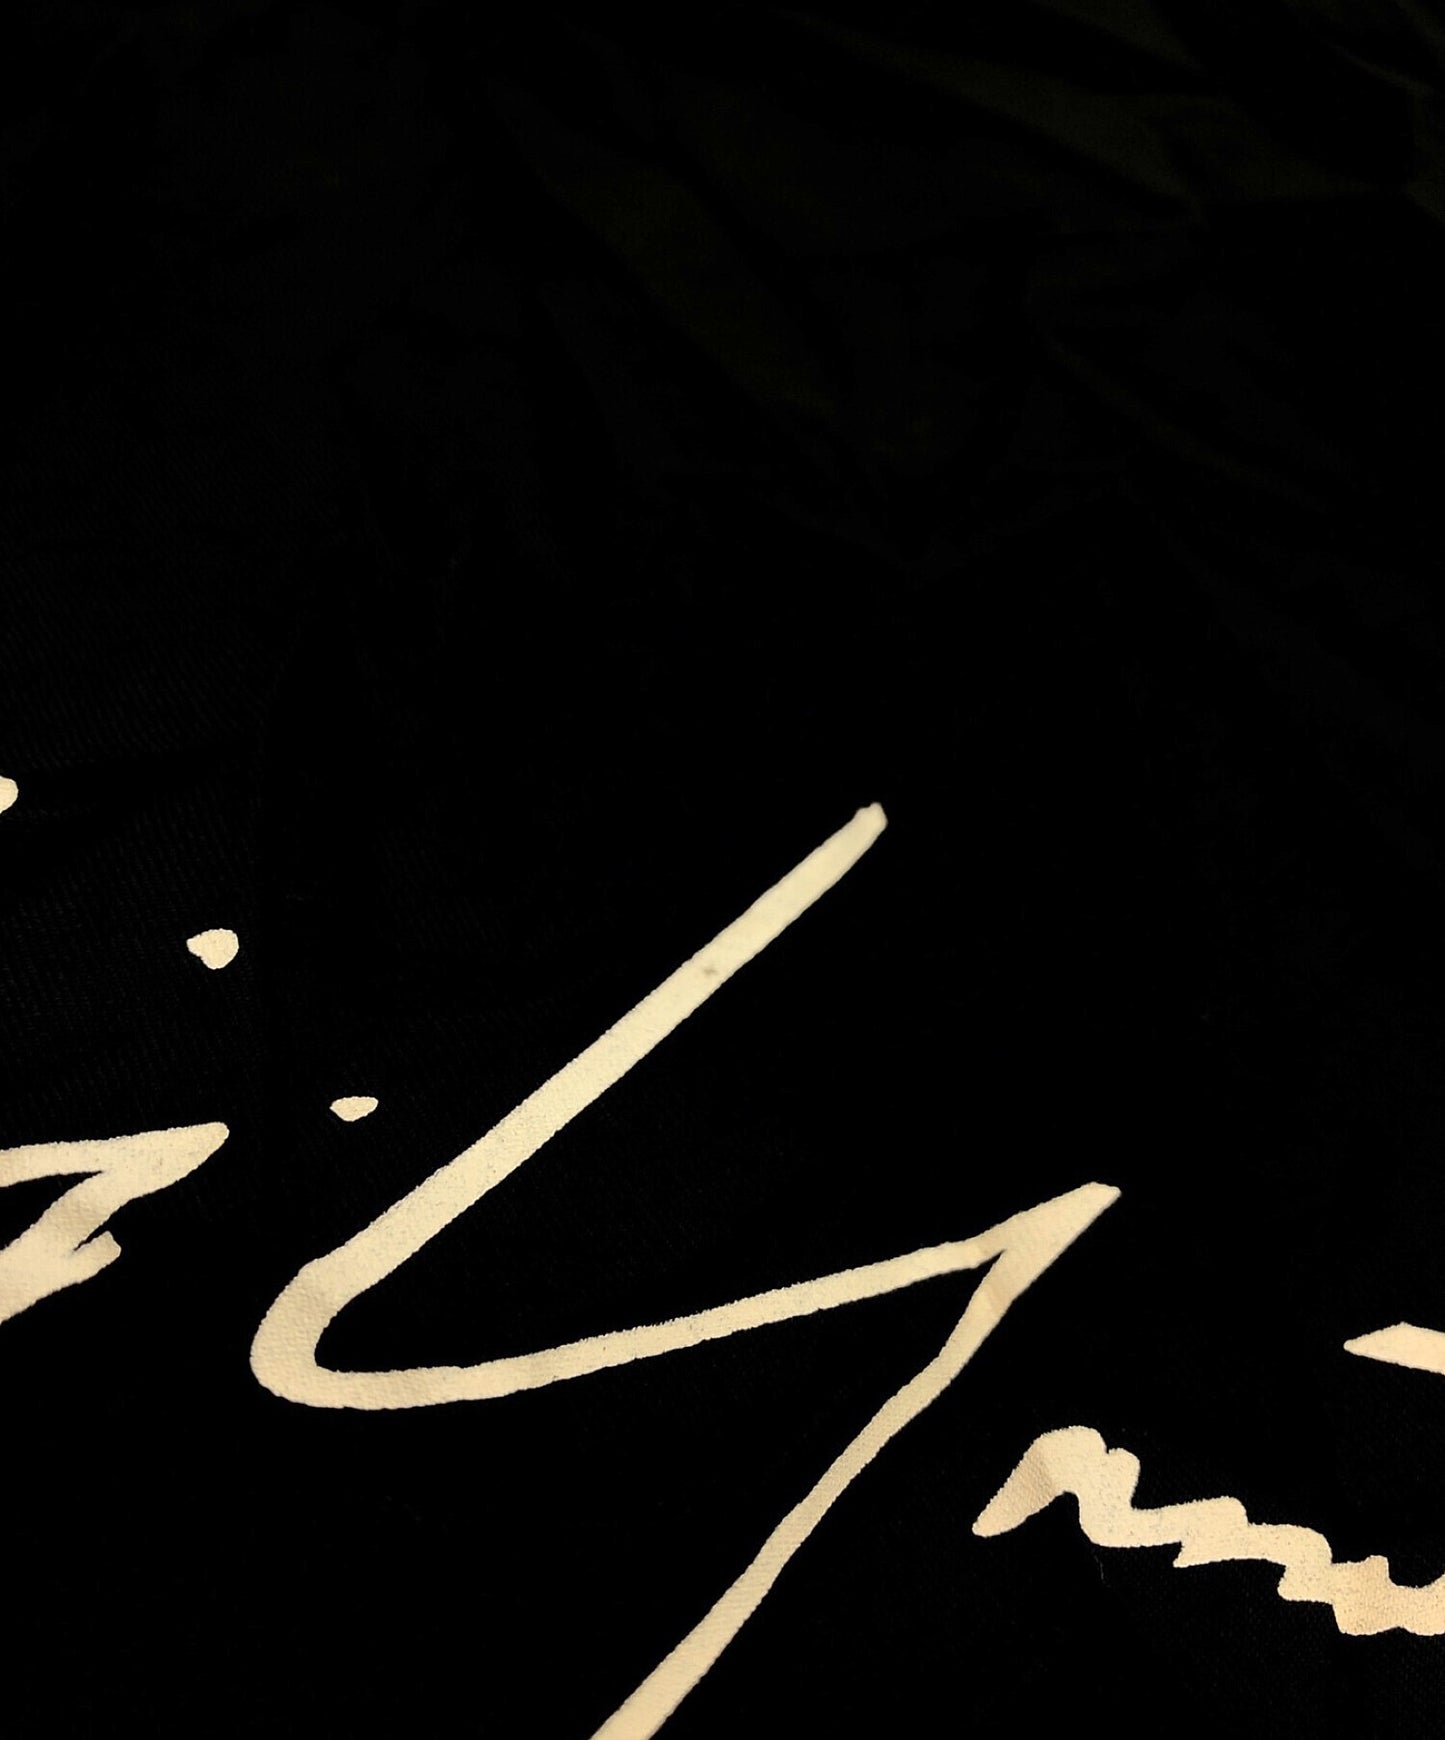 Yohji Yamamoto pour homme Twill Wrinkle Finish Staff Shirt HW-B09-941